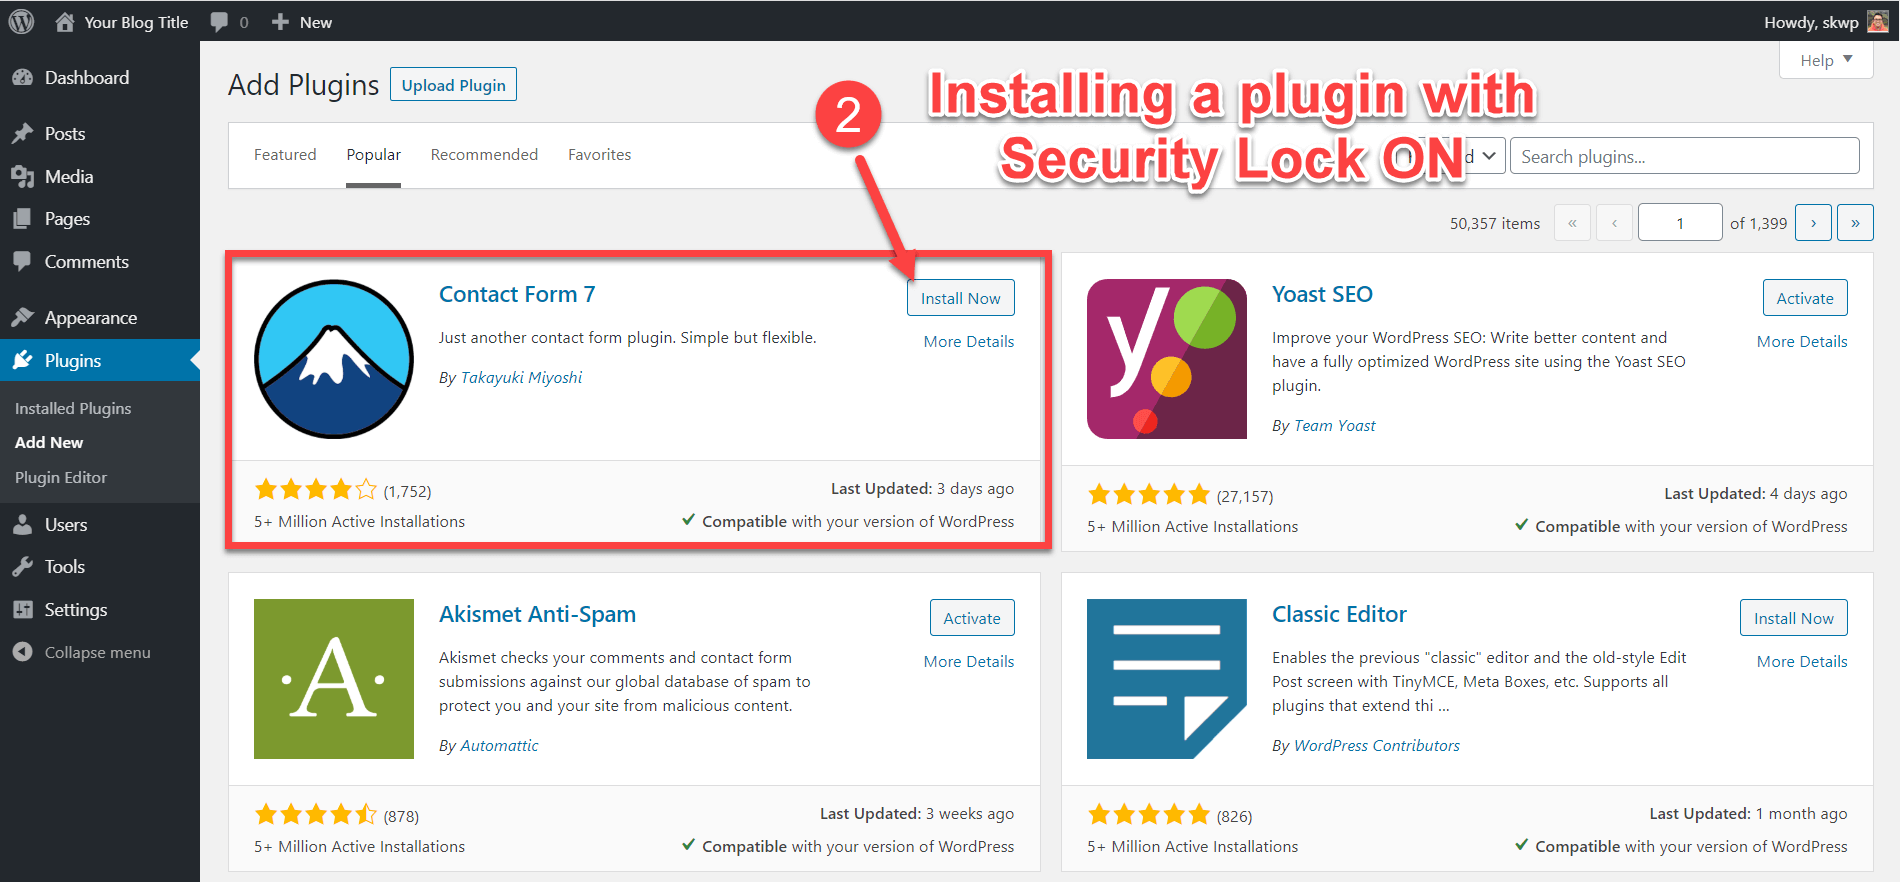 scala swordpress manager options - security lock 2